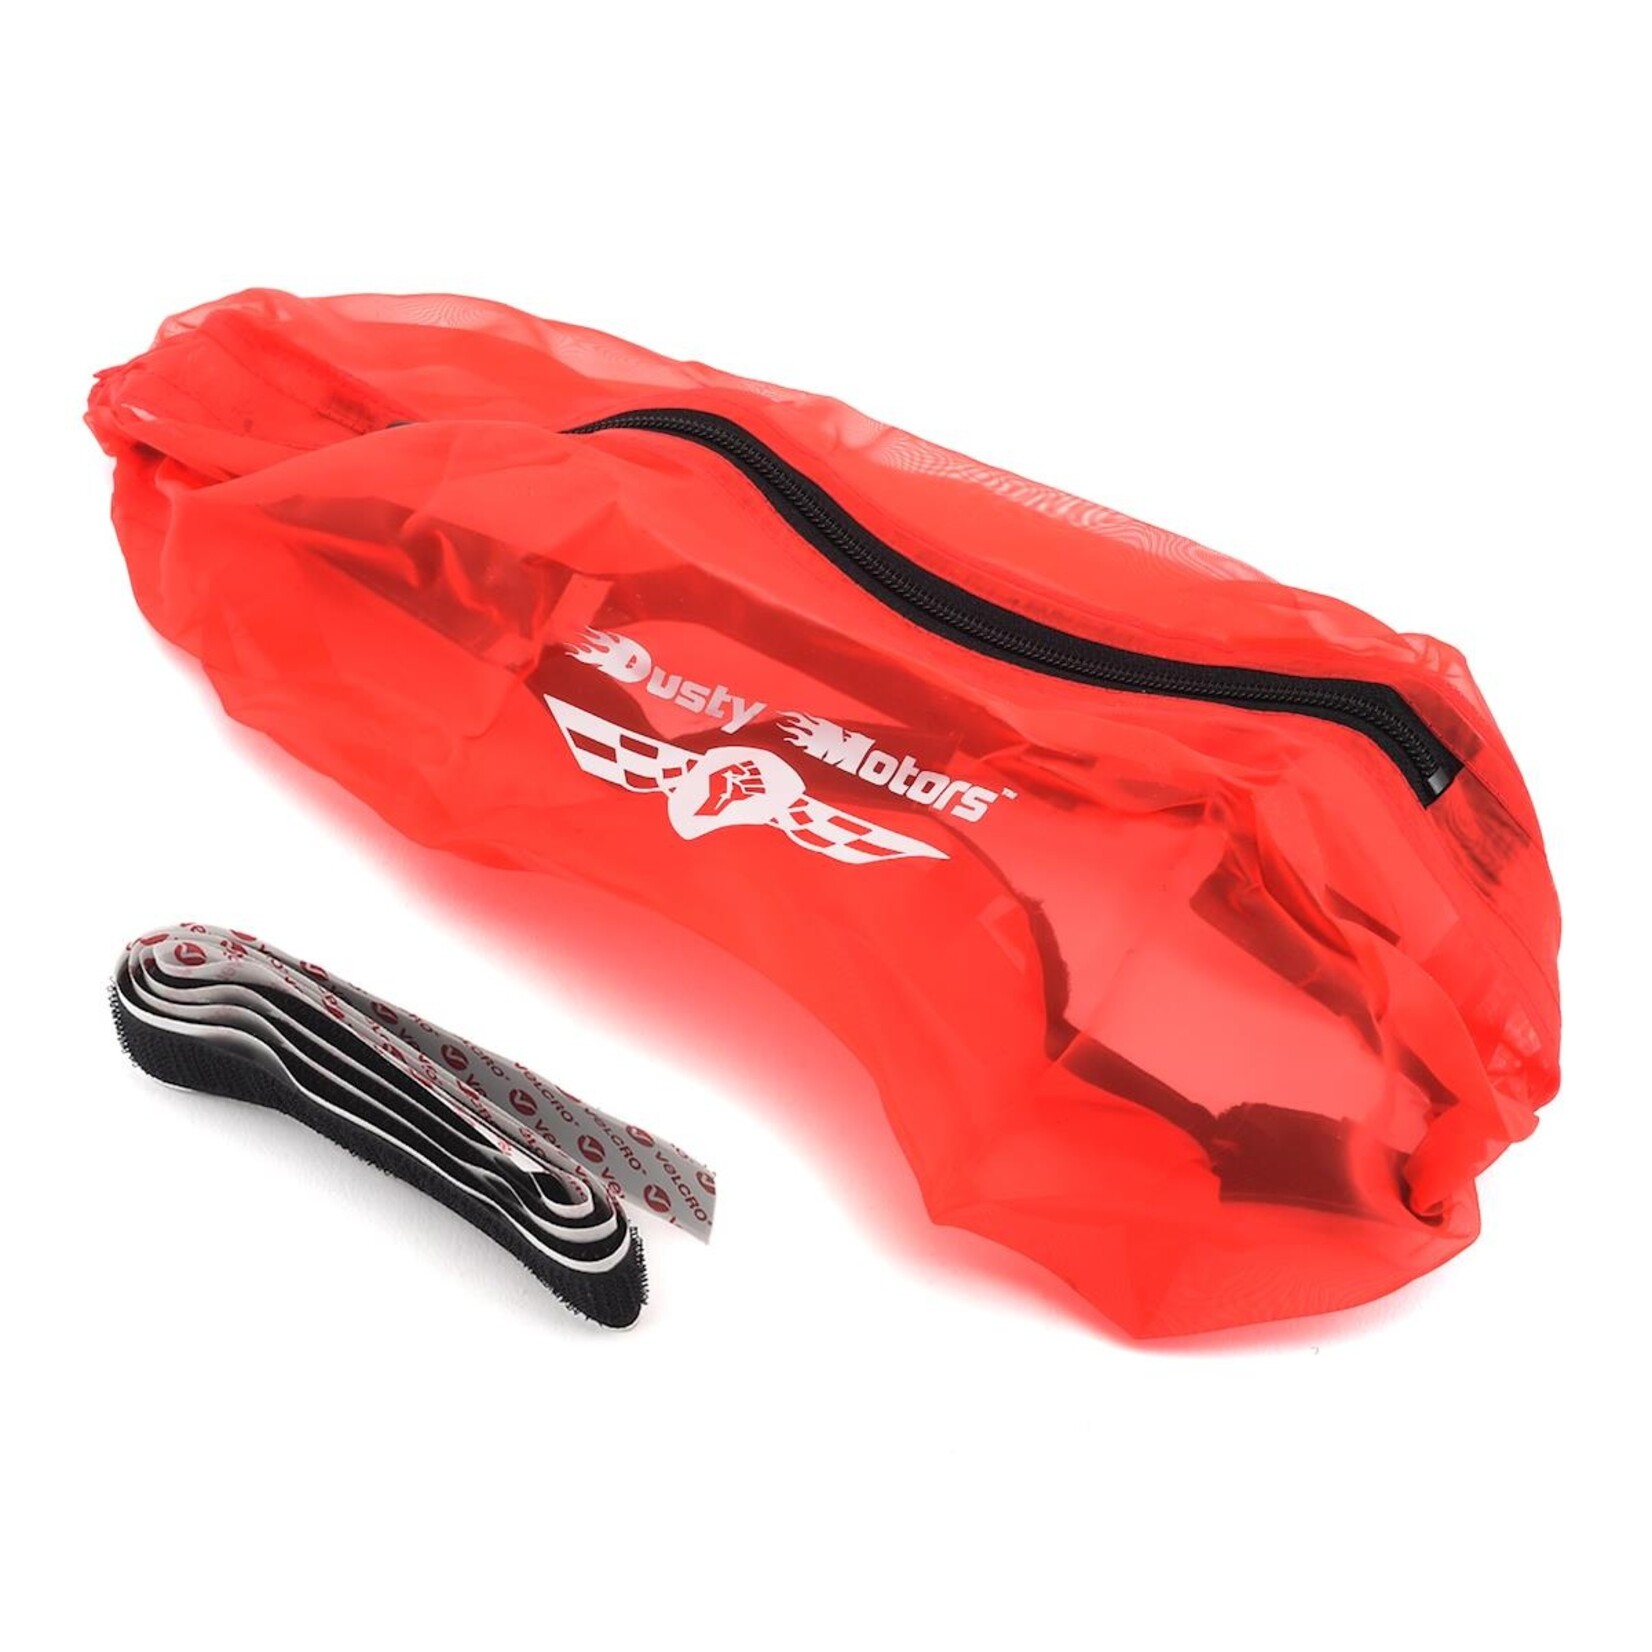 Dusty Motors Dusty Motors Arrma Senton Protection Cover (Red) #DTY-ARM0033